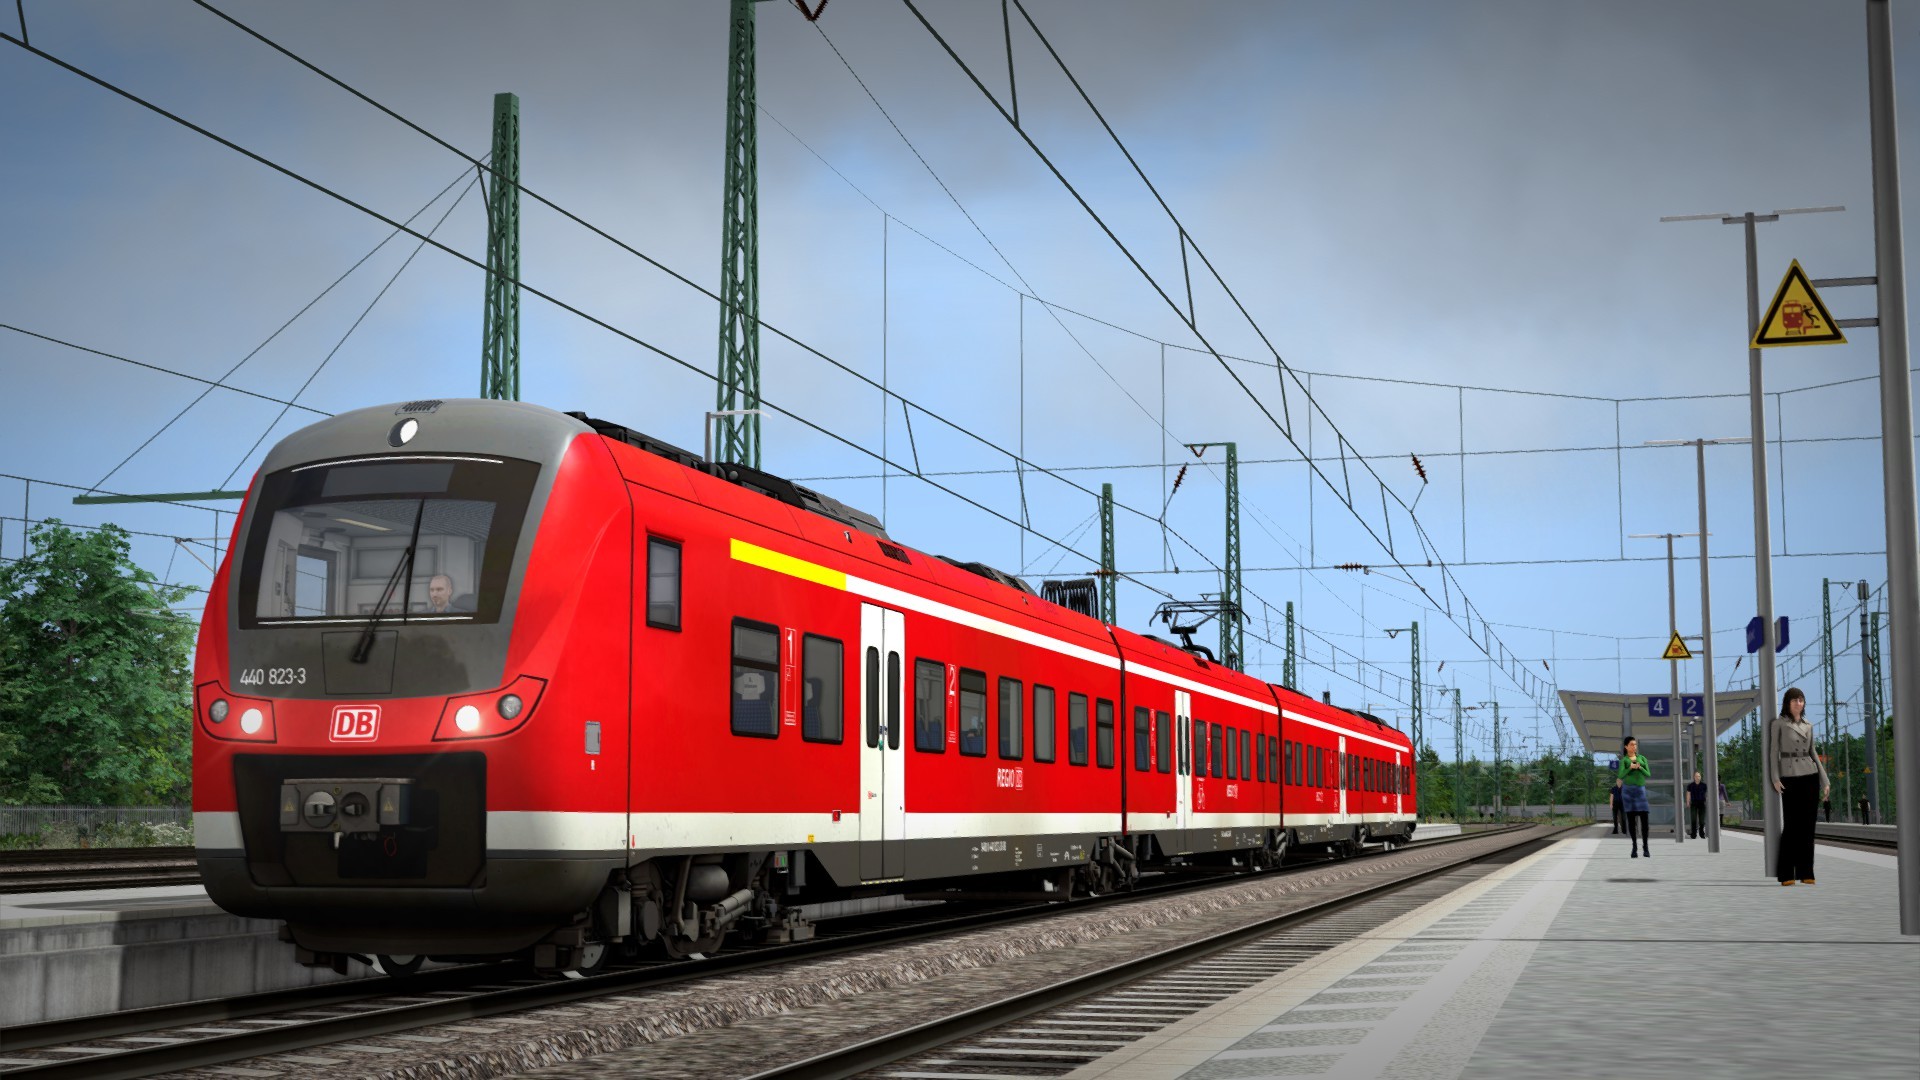 train simulator 2020 free download steam edition download